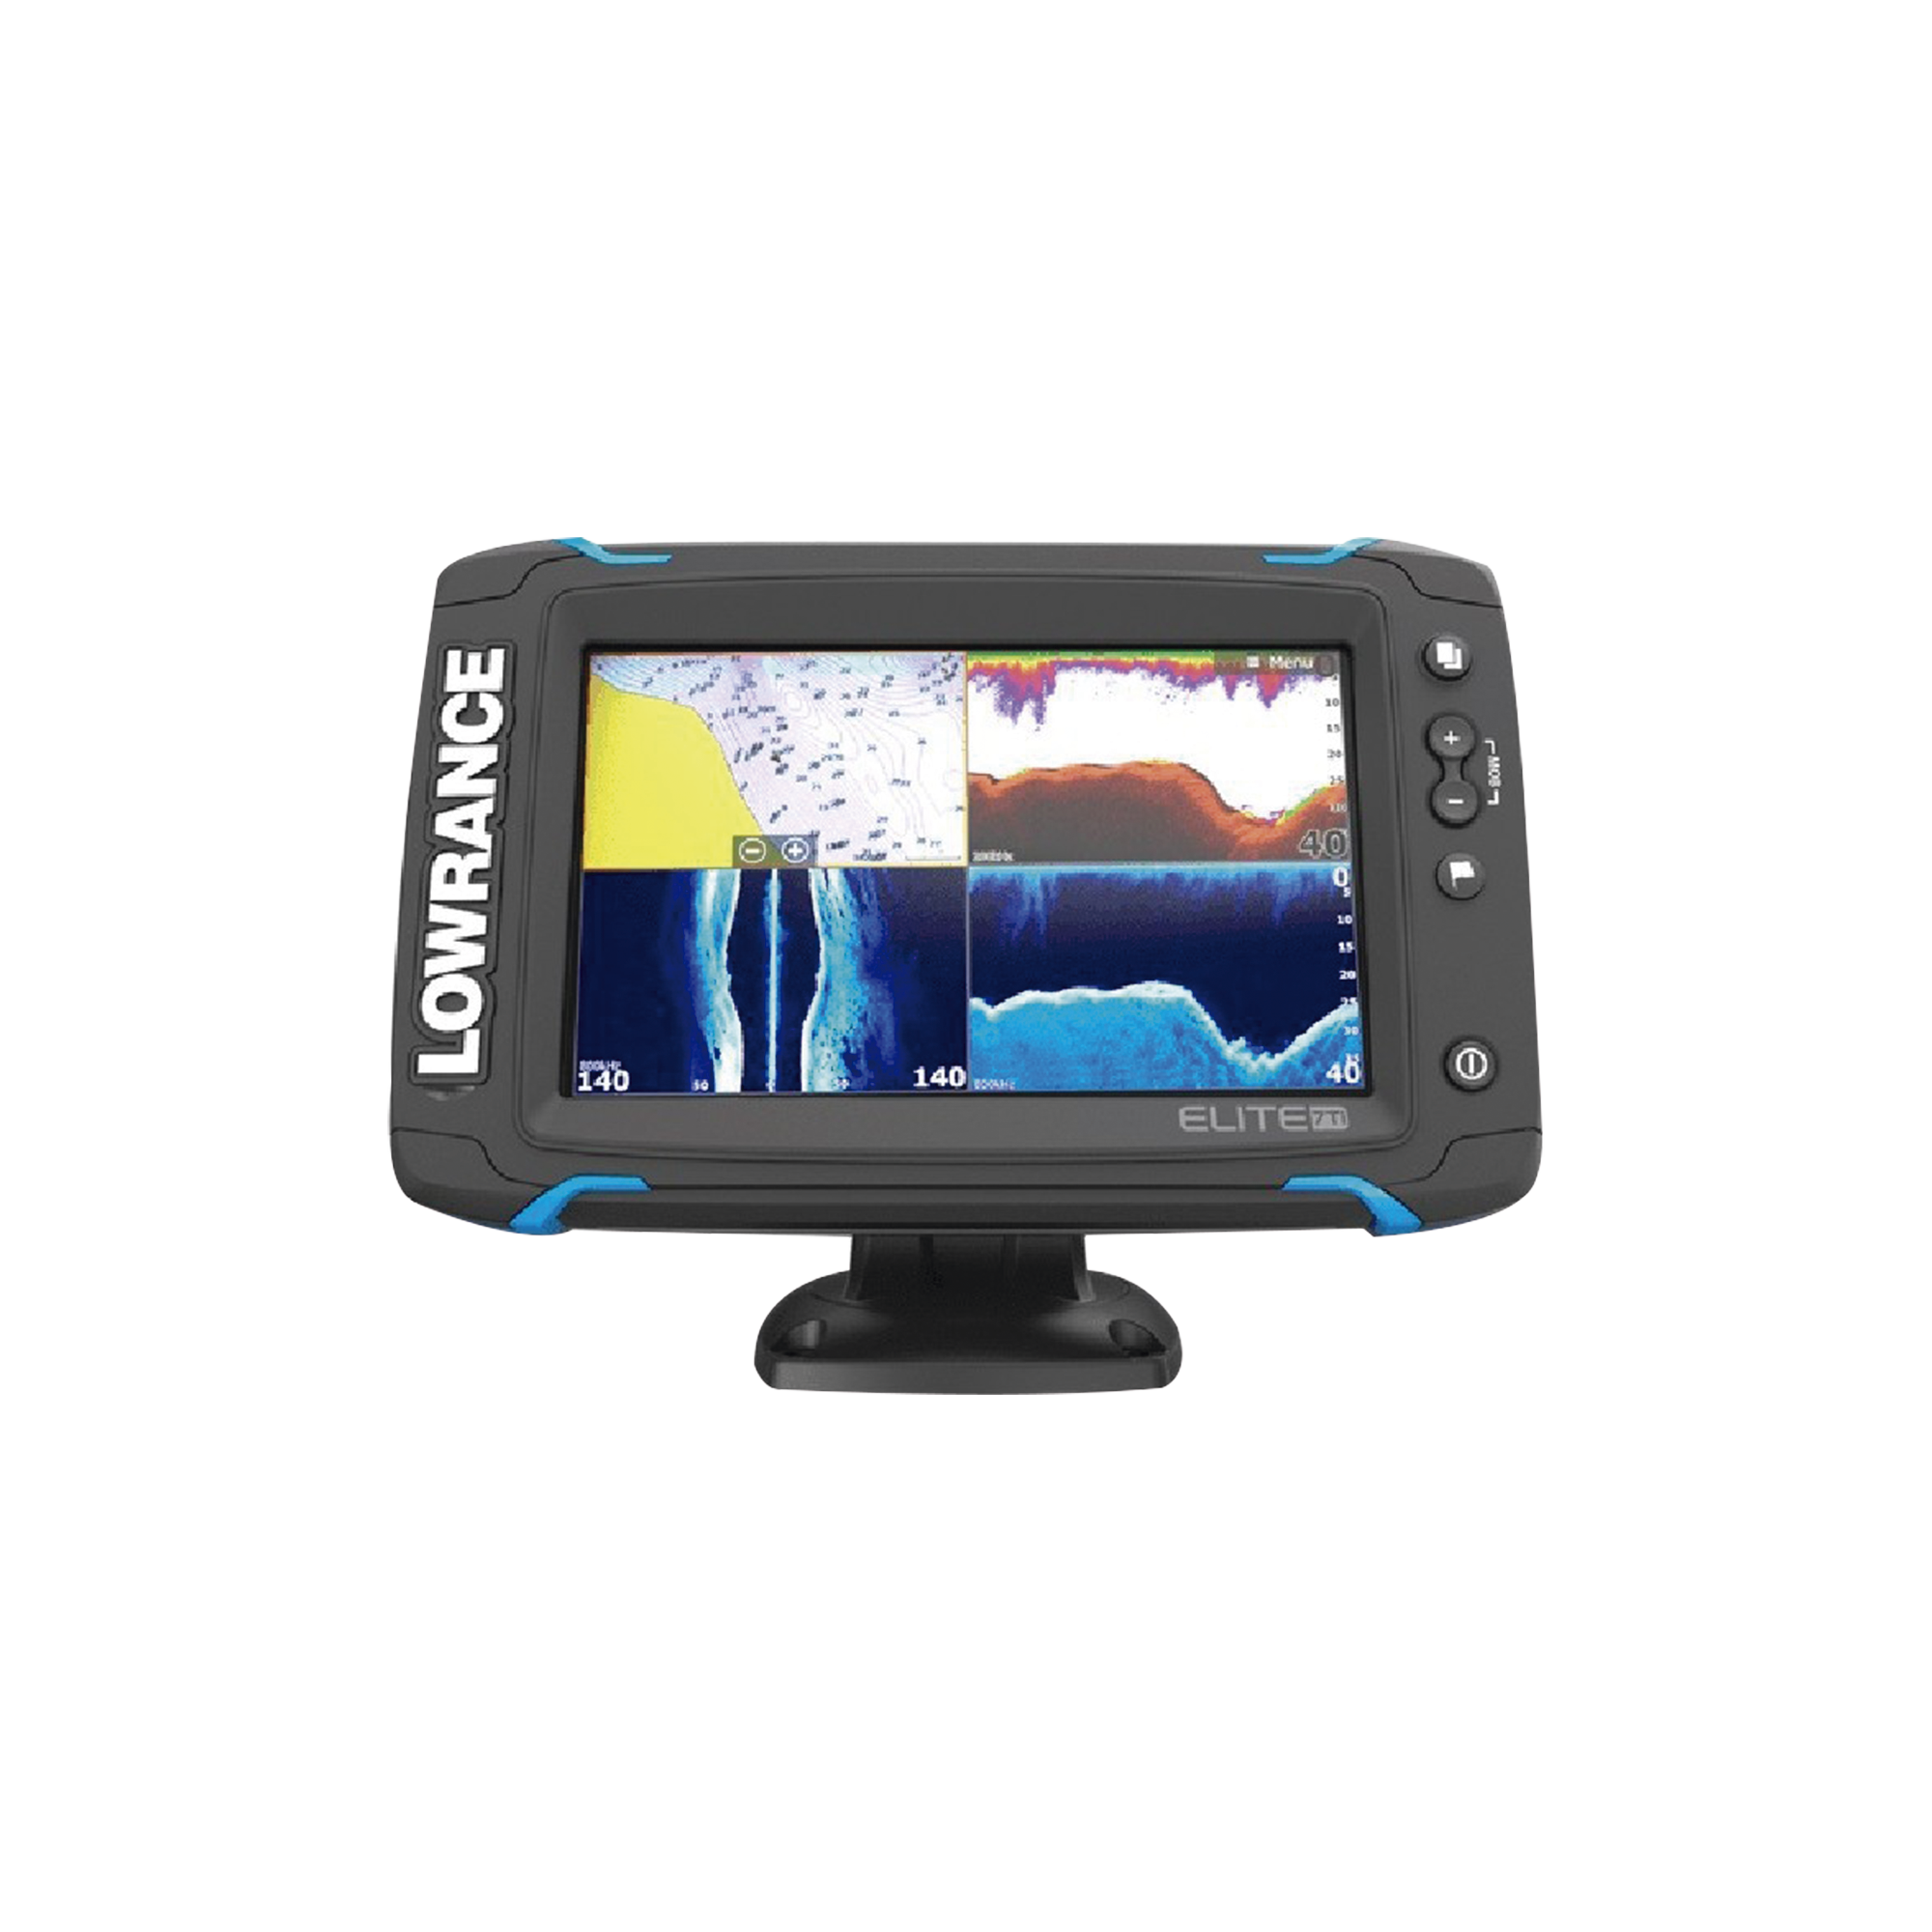 Elite-7 Ti Fishfinder / Chartplotter de 7 pulgadas con pantalla LED retroiluminada de alto brillo con tecnología CHIRP, DownScan ™ y StructureScan ™, incorporada. Incluye transducer total scan